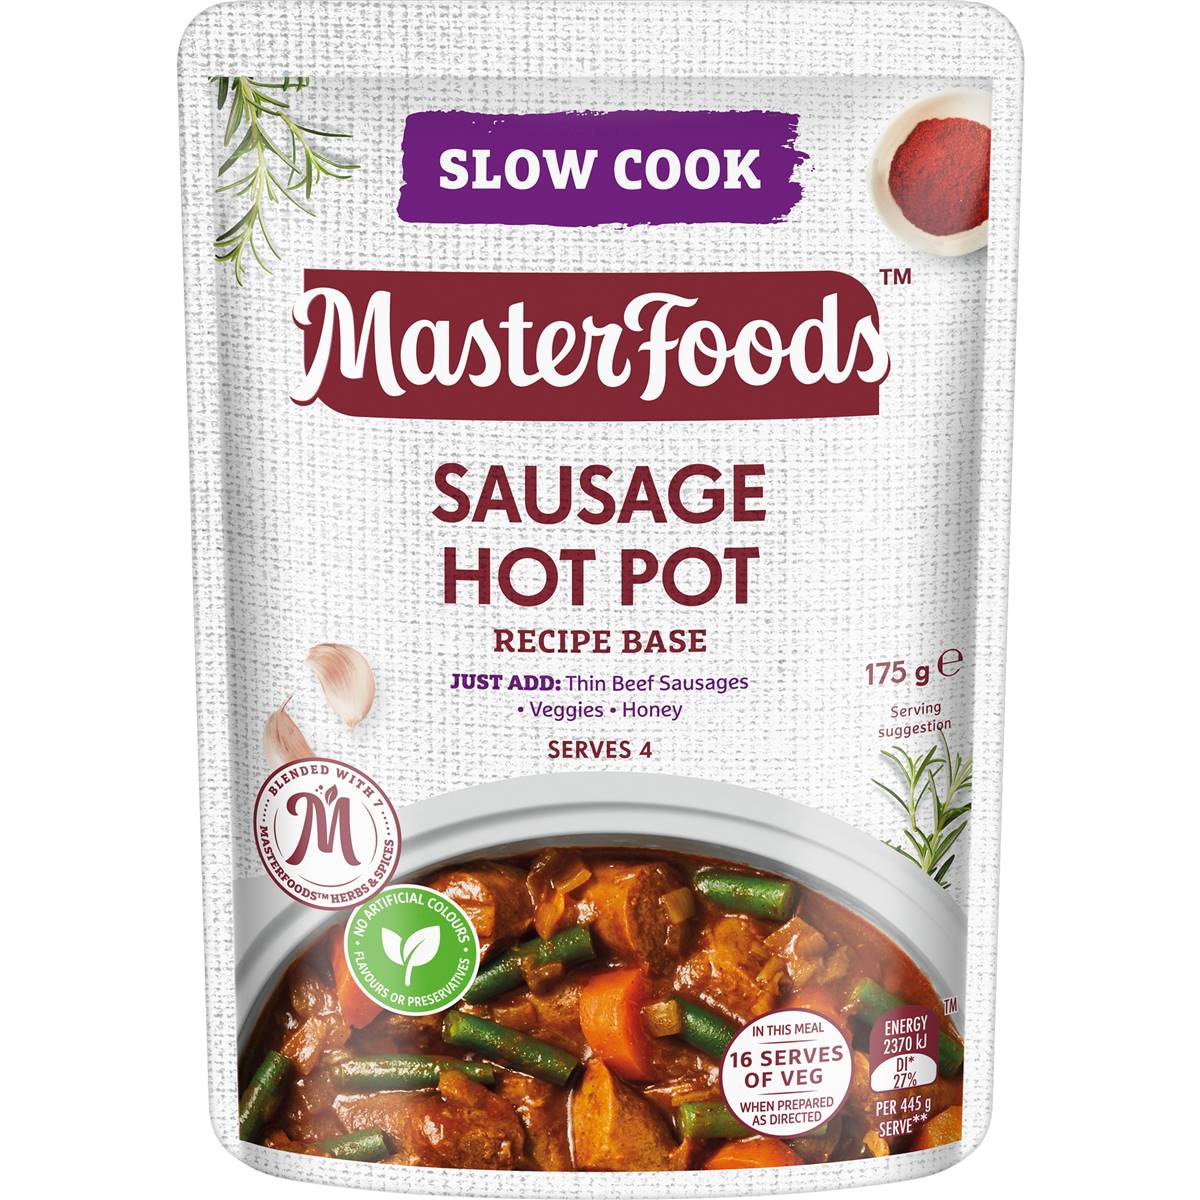 Masterfoods Slow Cooker Sausage Hot Pot